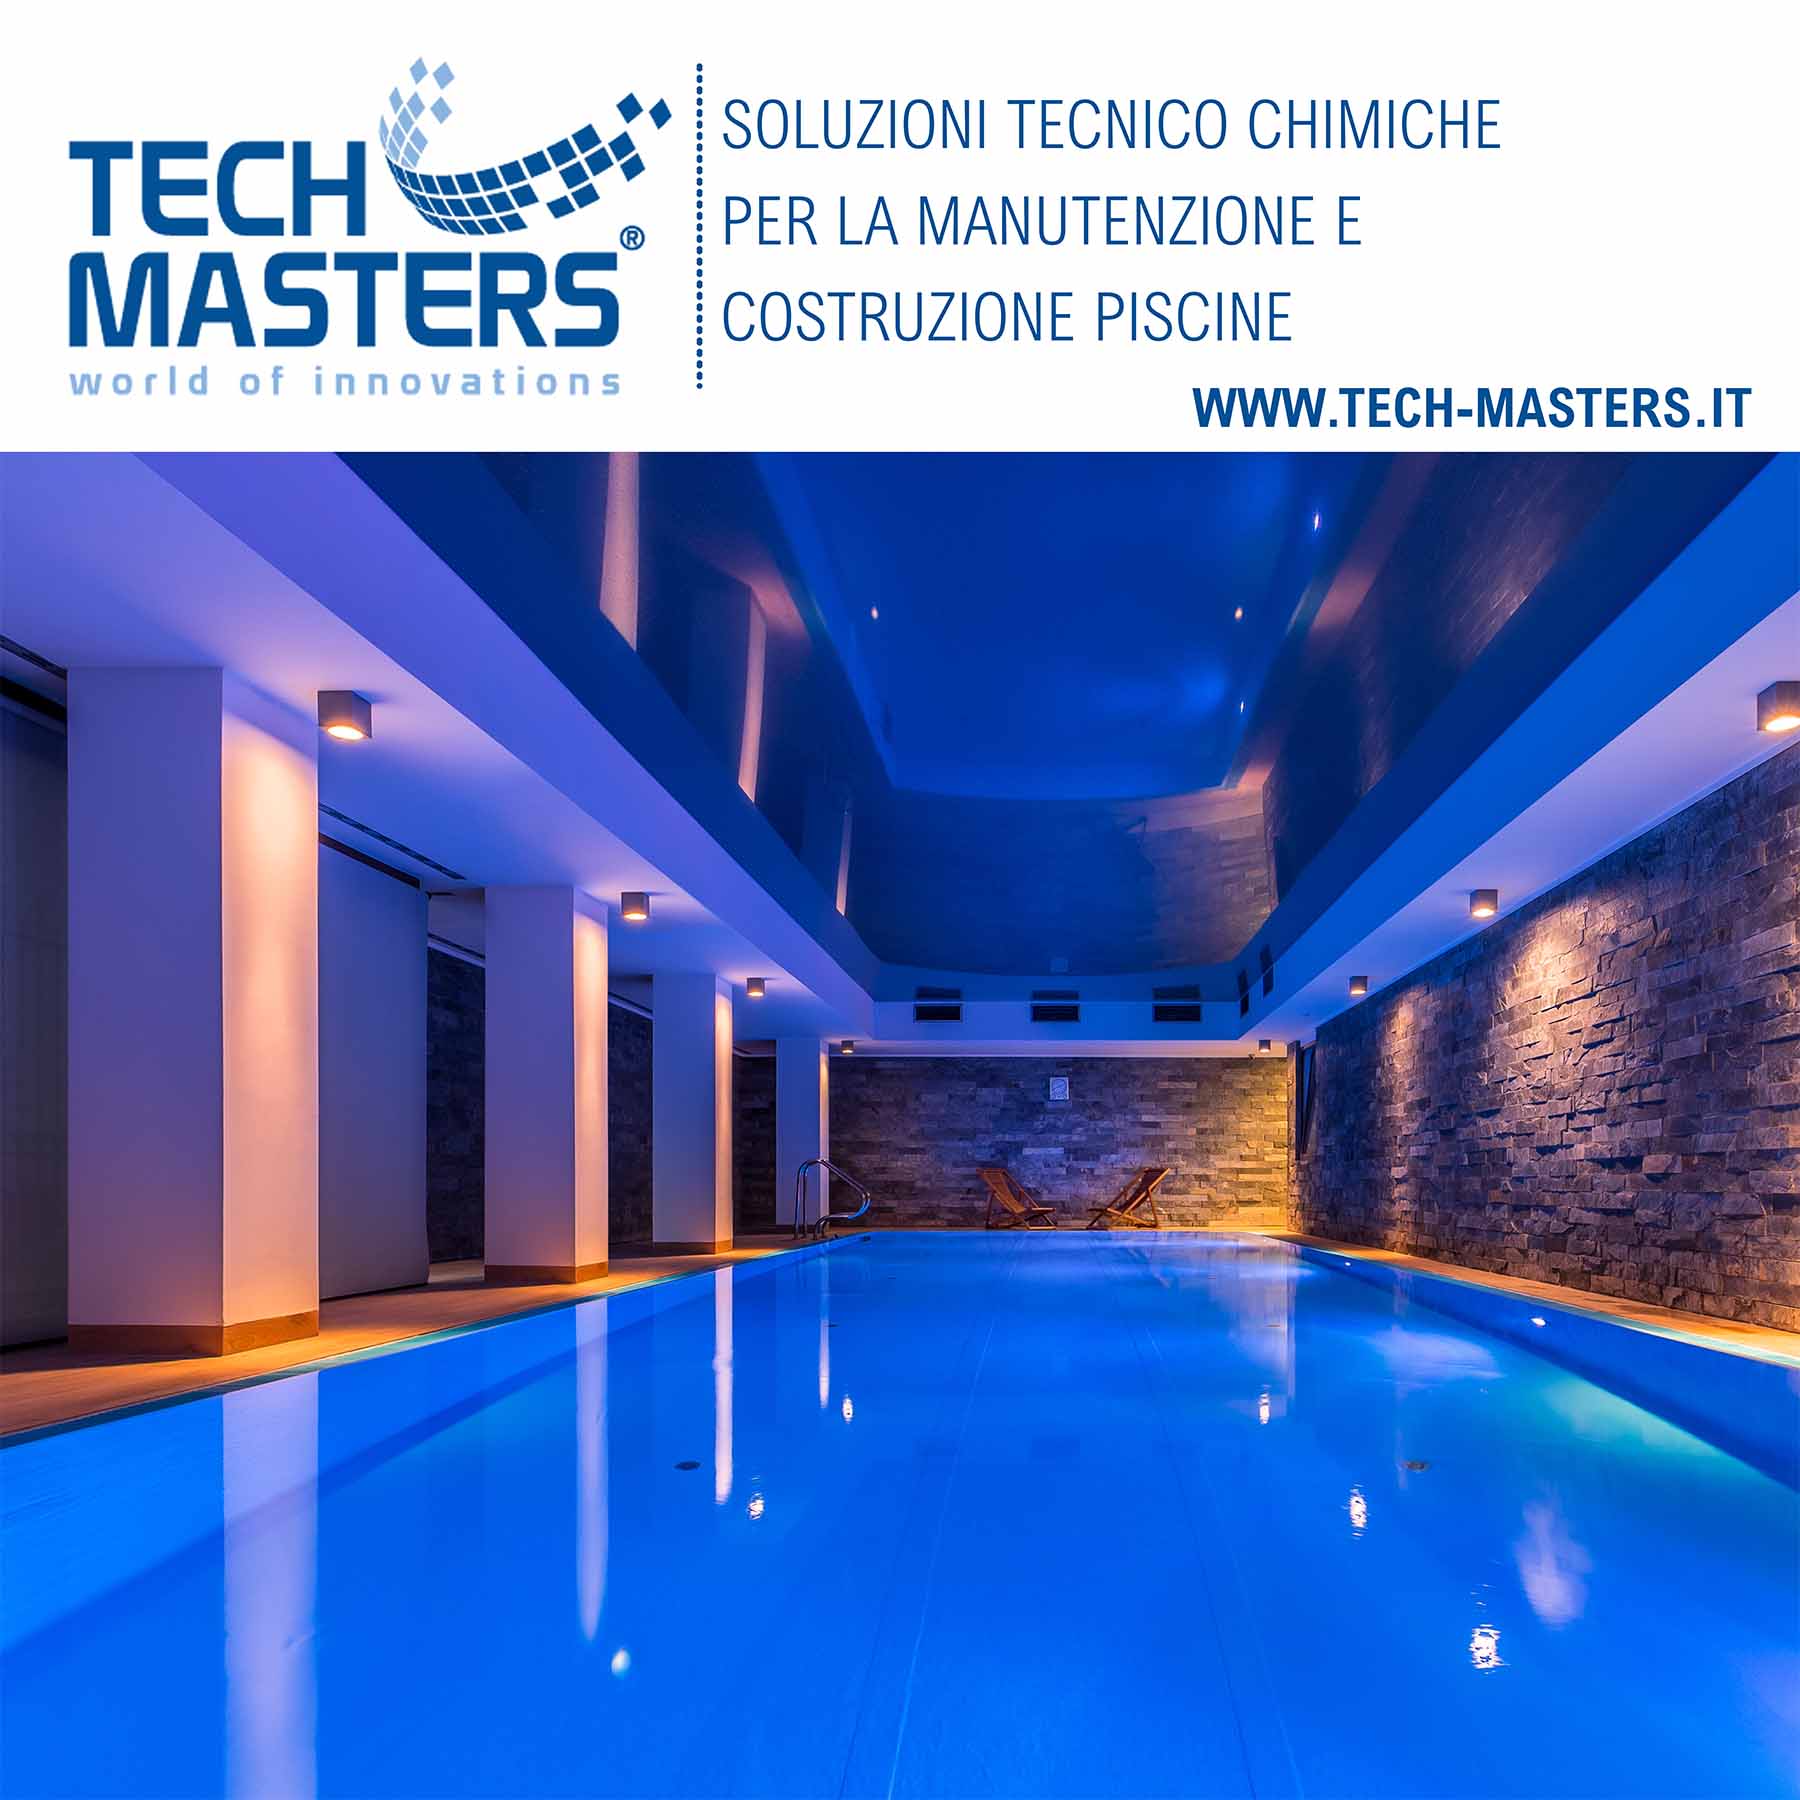 Tech-Masters Italia Srl